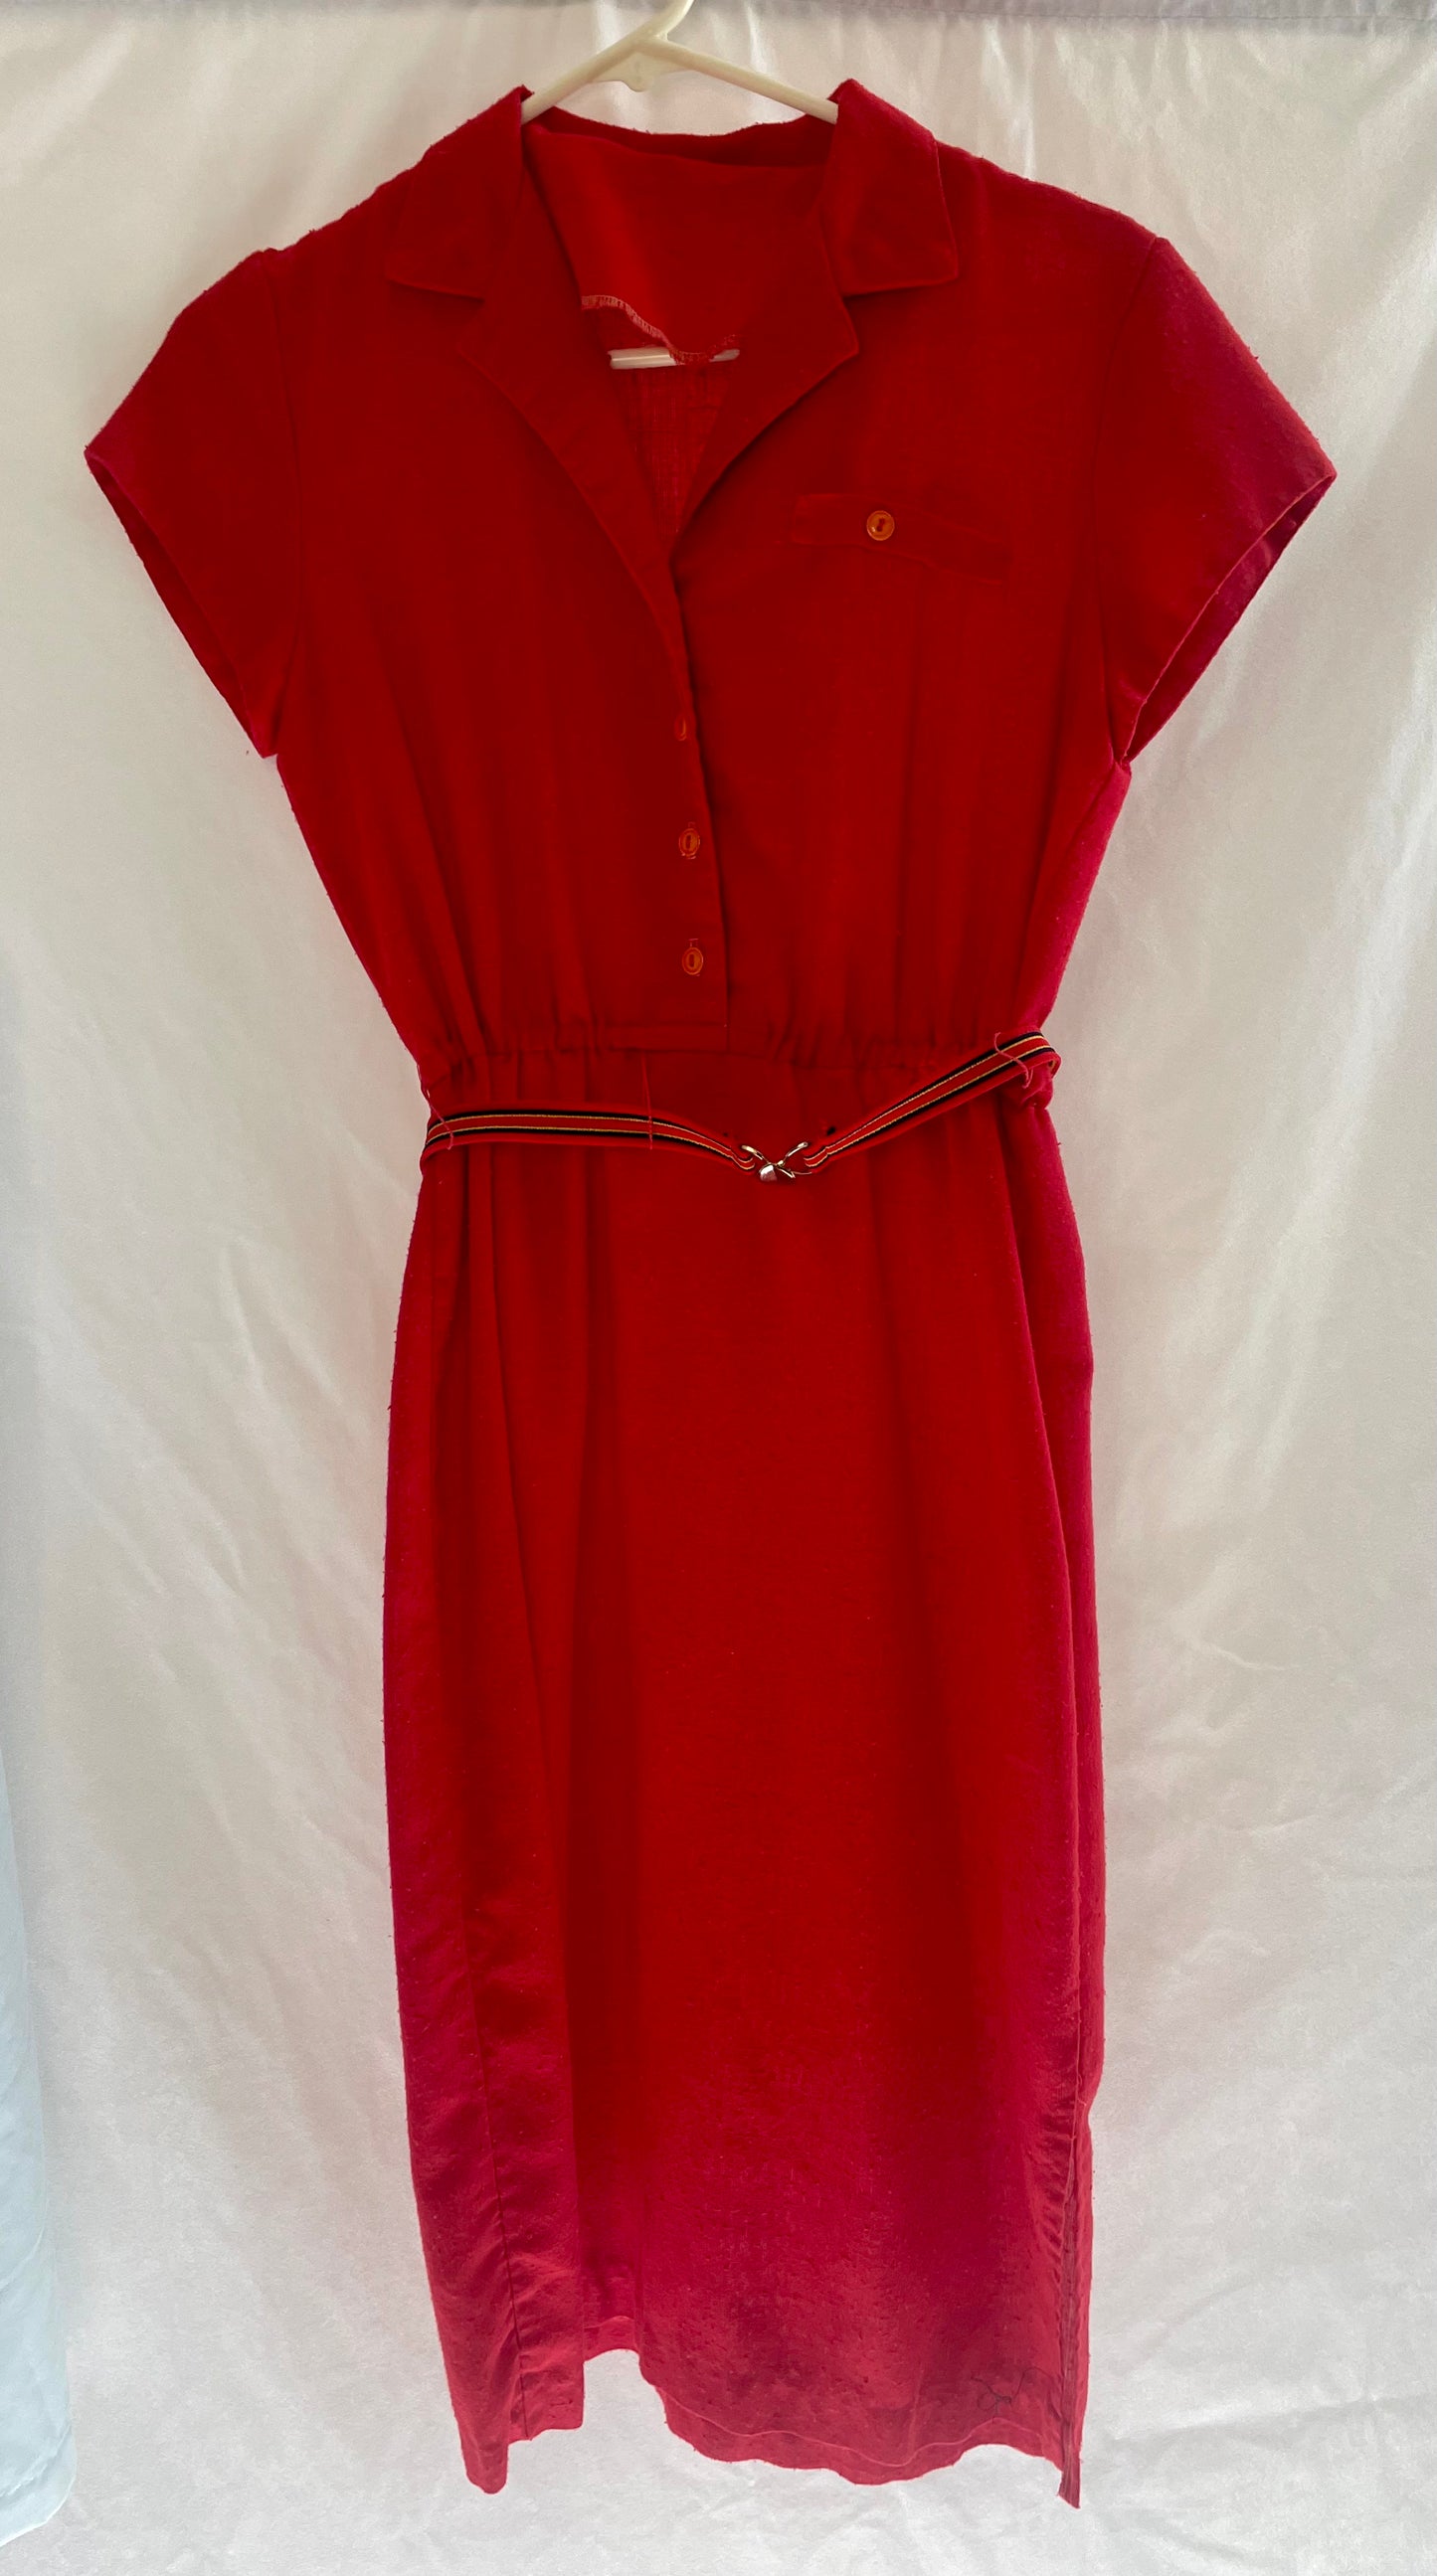 Vintage 1970's Red Dress with Belt